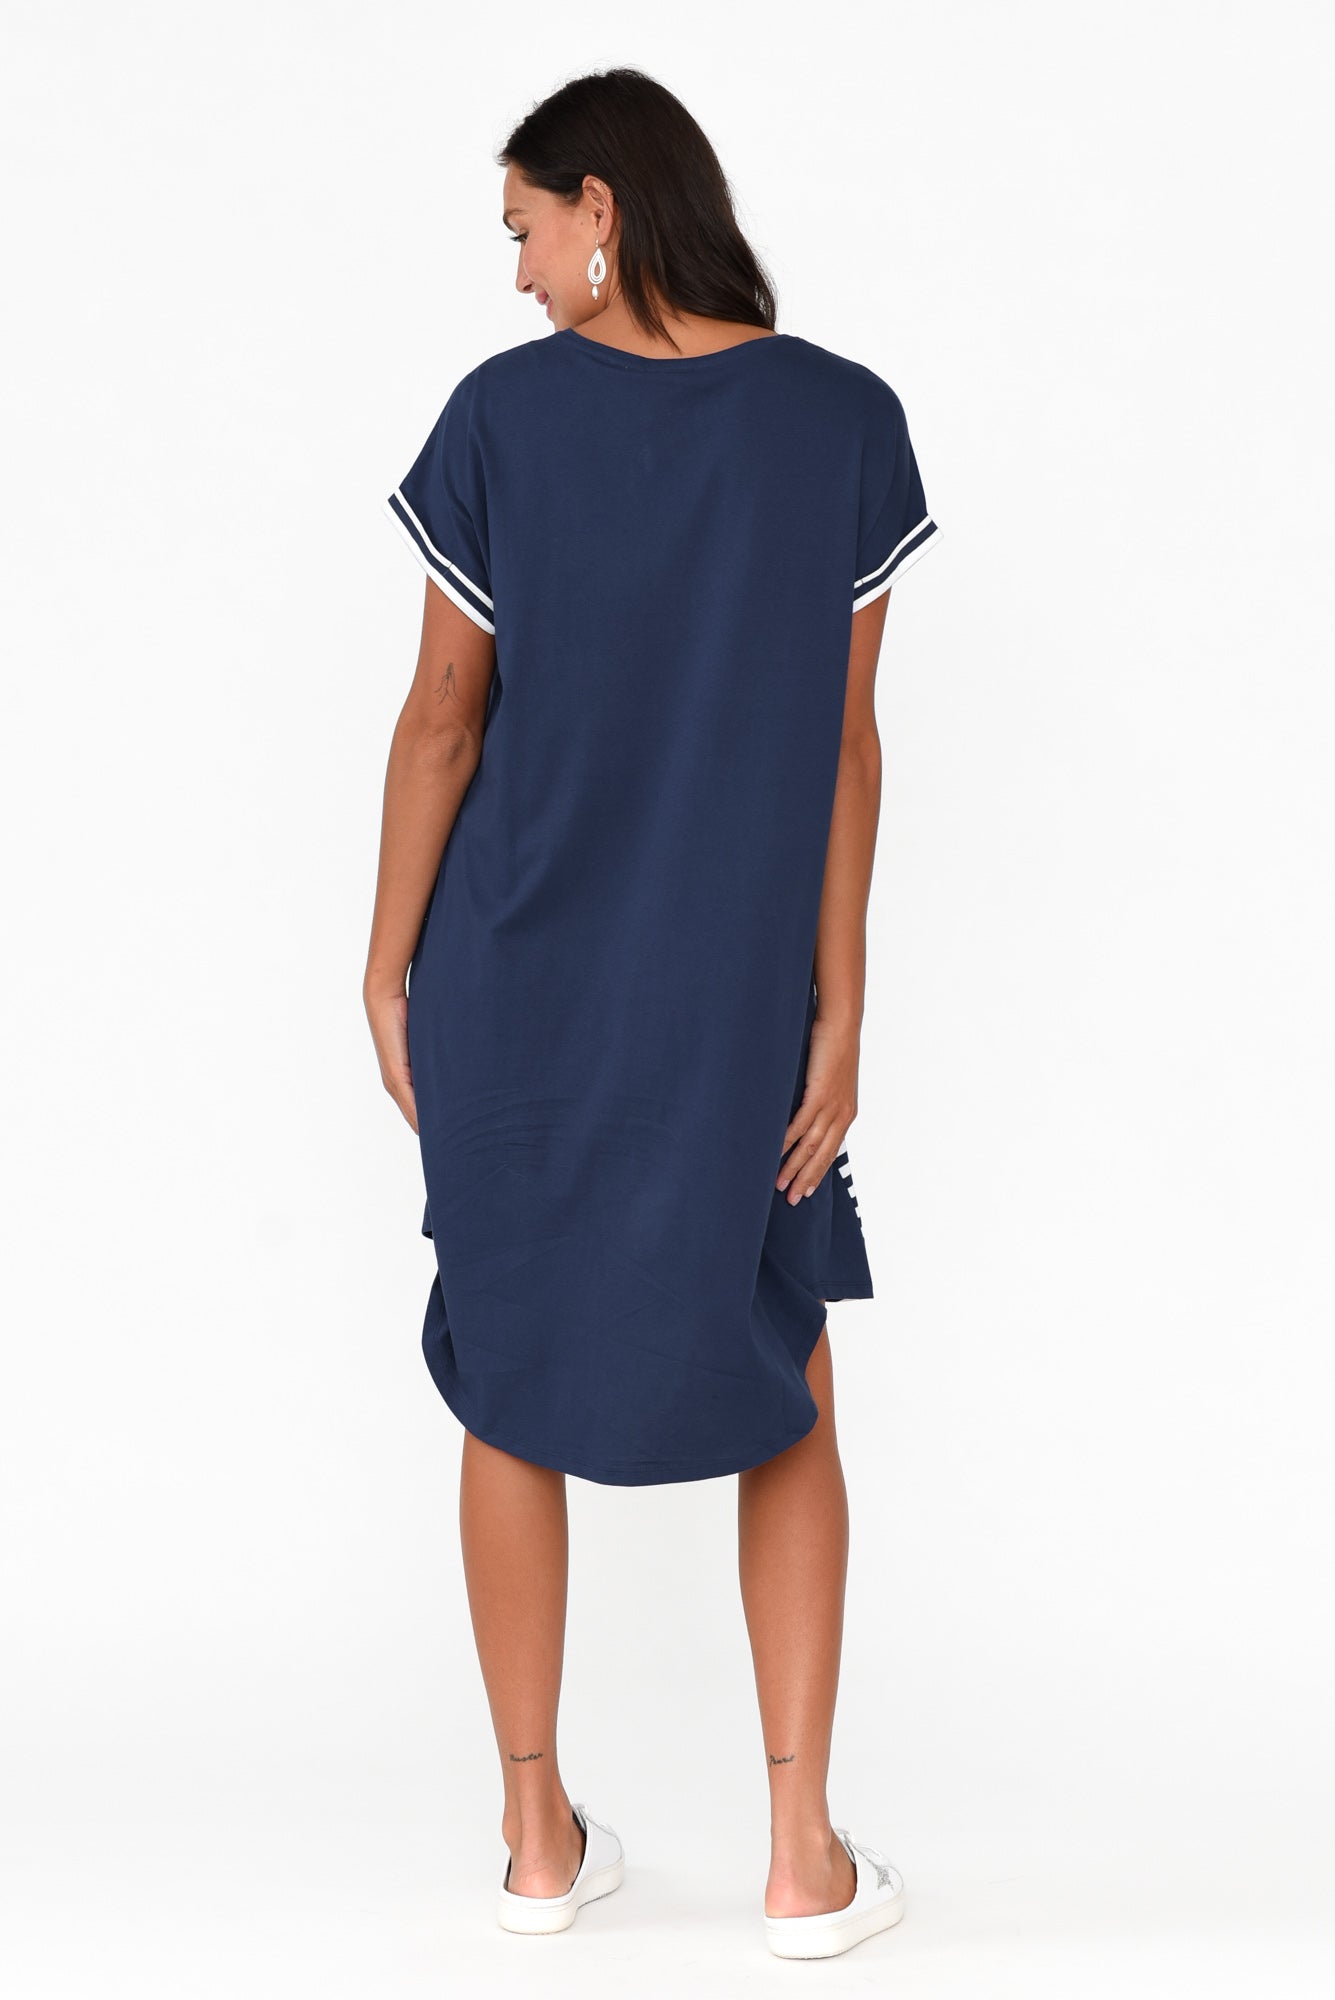 Maxine Navy Stripe Cotton T-Shirt Dress - Blue Bungalow